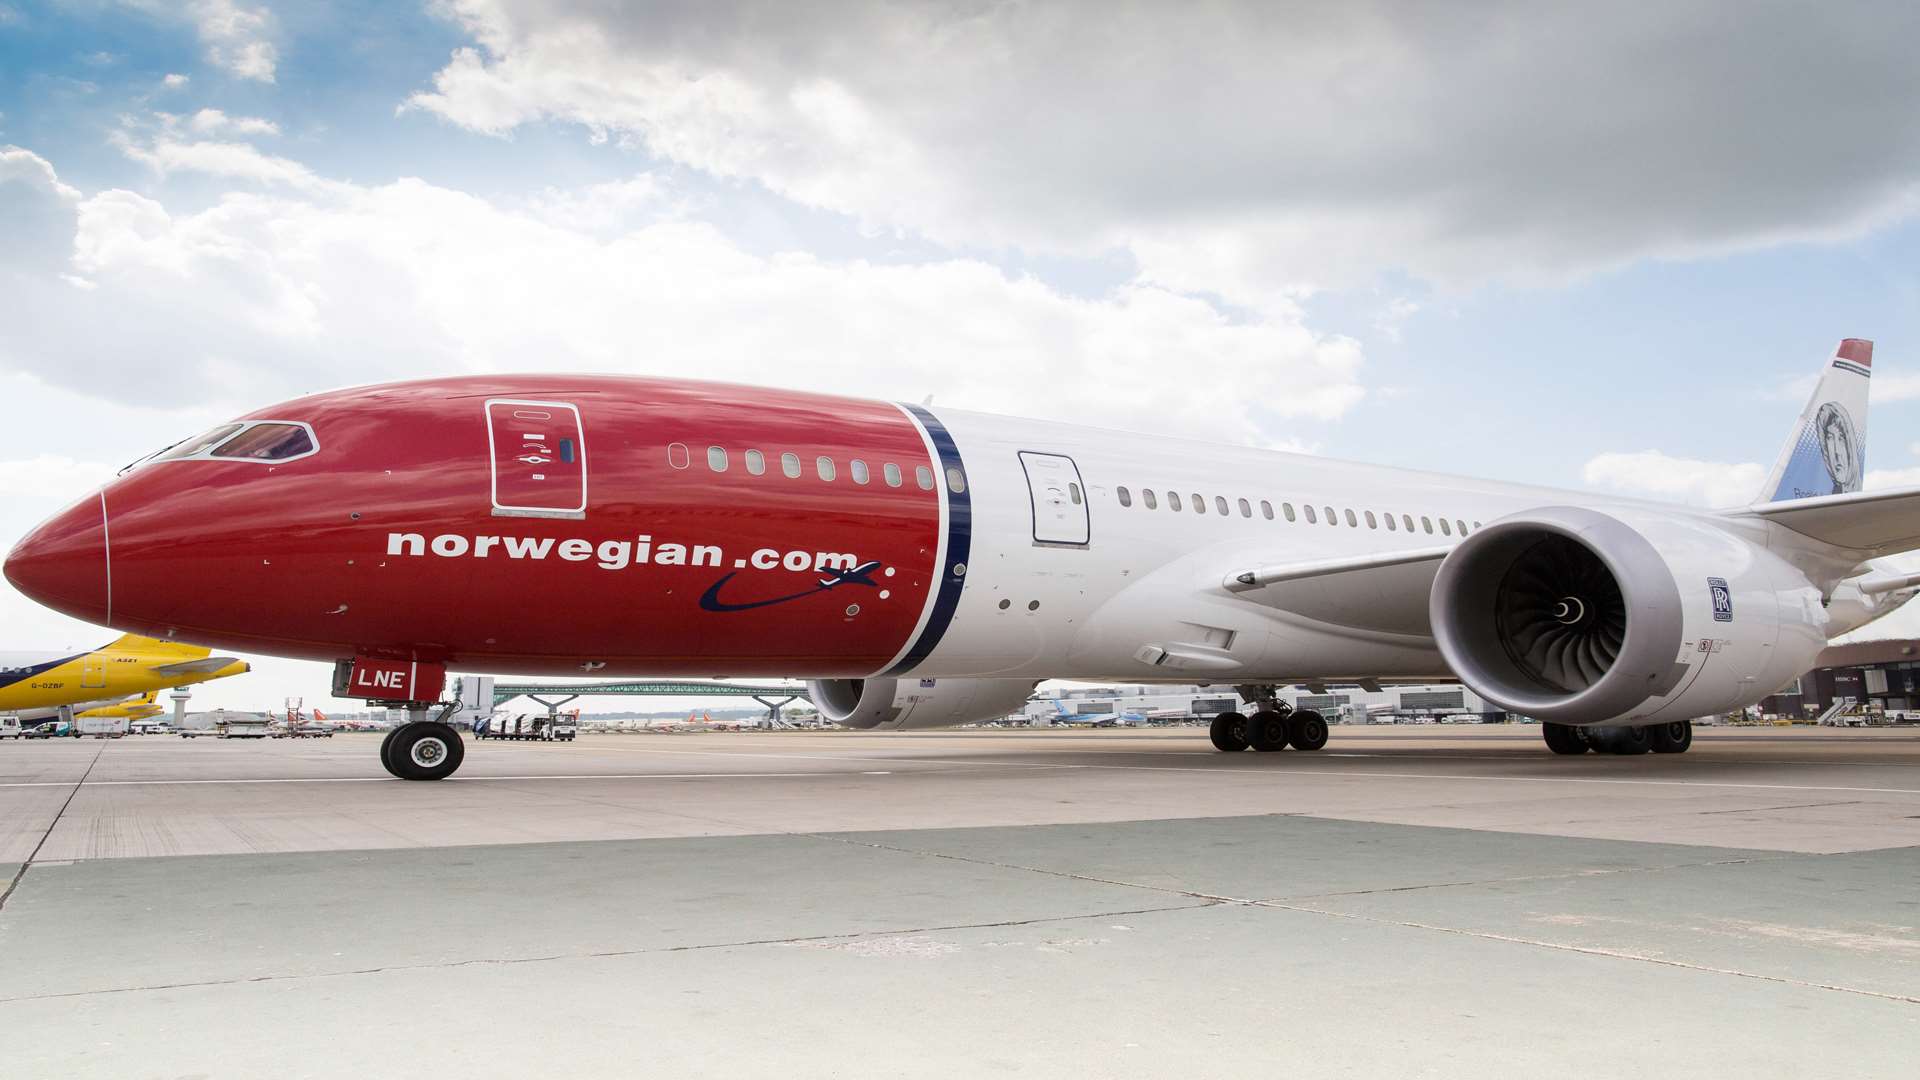 Norwegian's brand new Boeing 787 Dreamliner aircraft